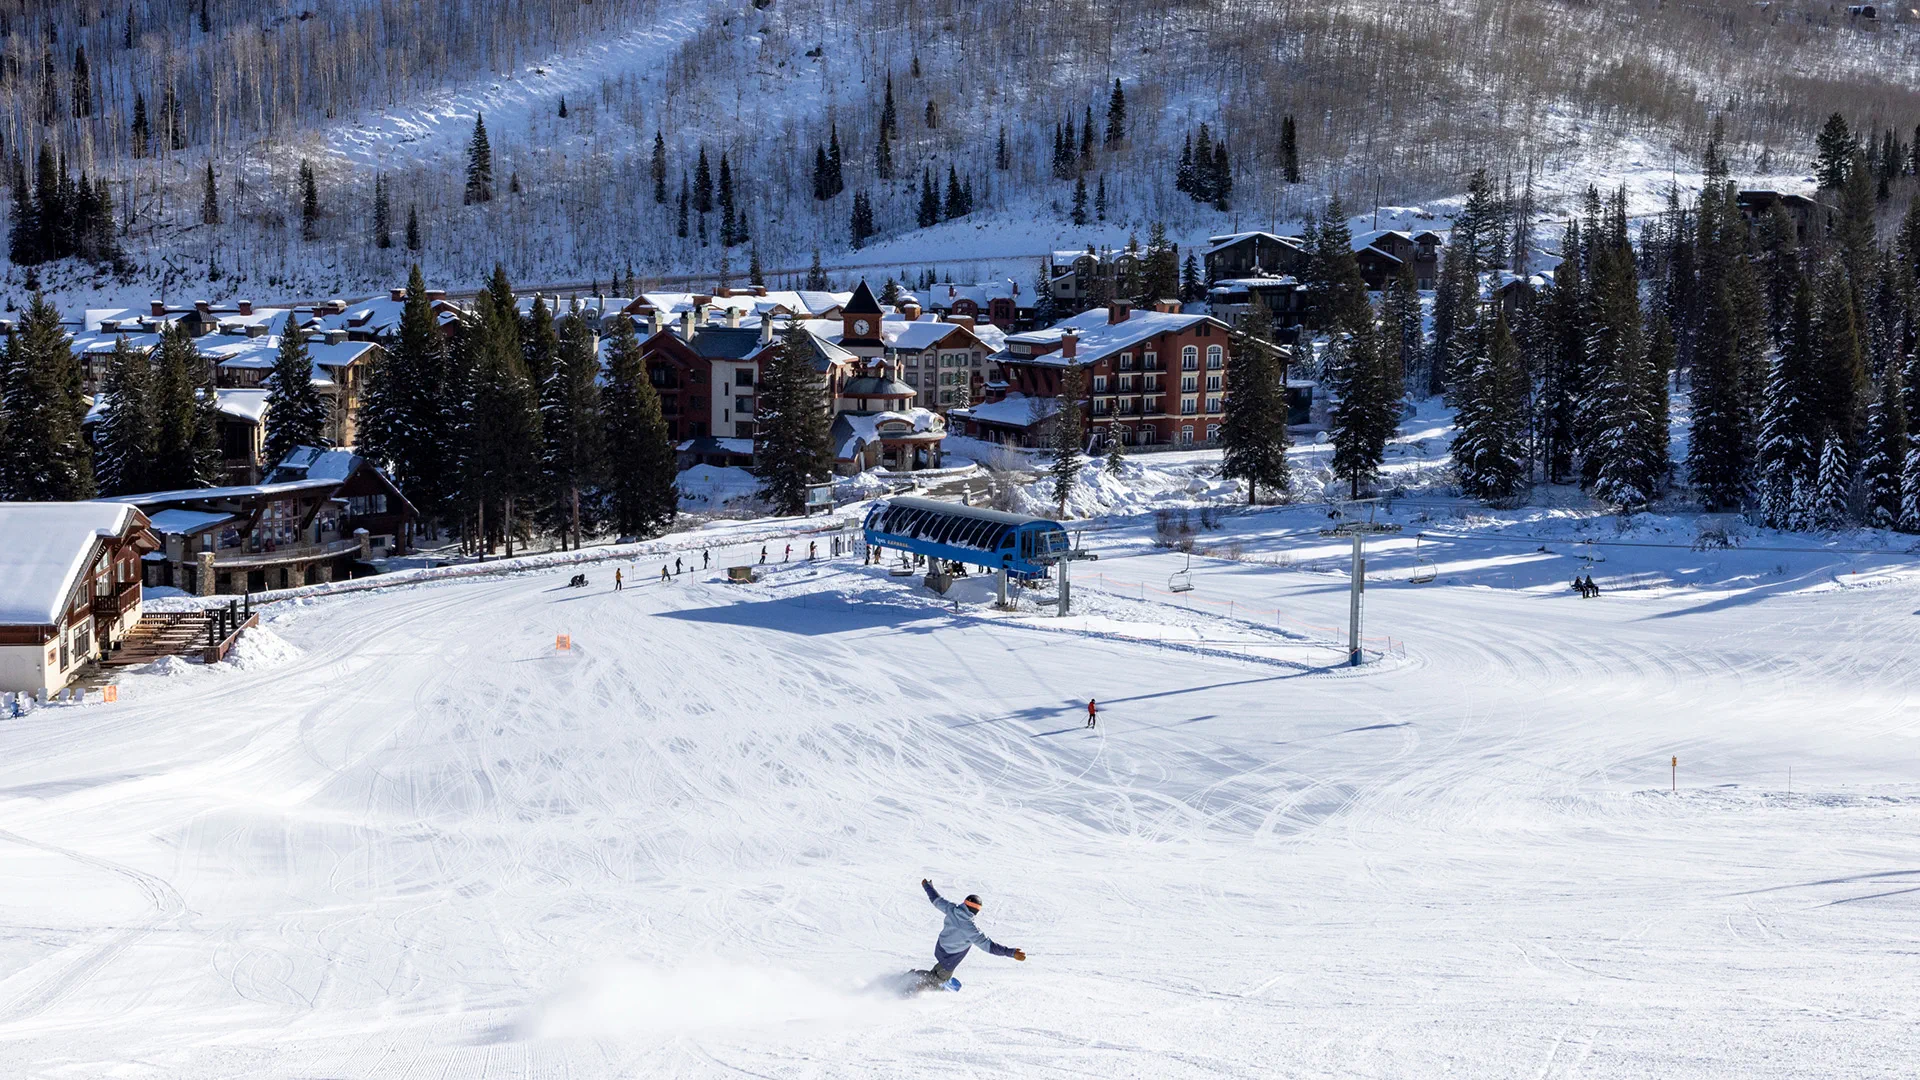 Snowboarding down to lodging at Solitude Mountain Resort